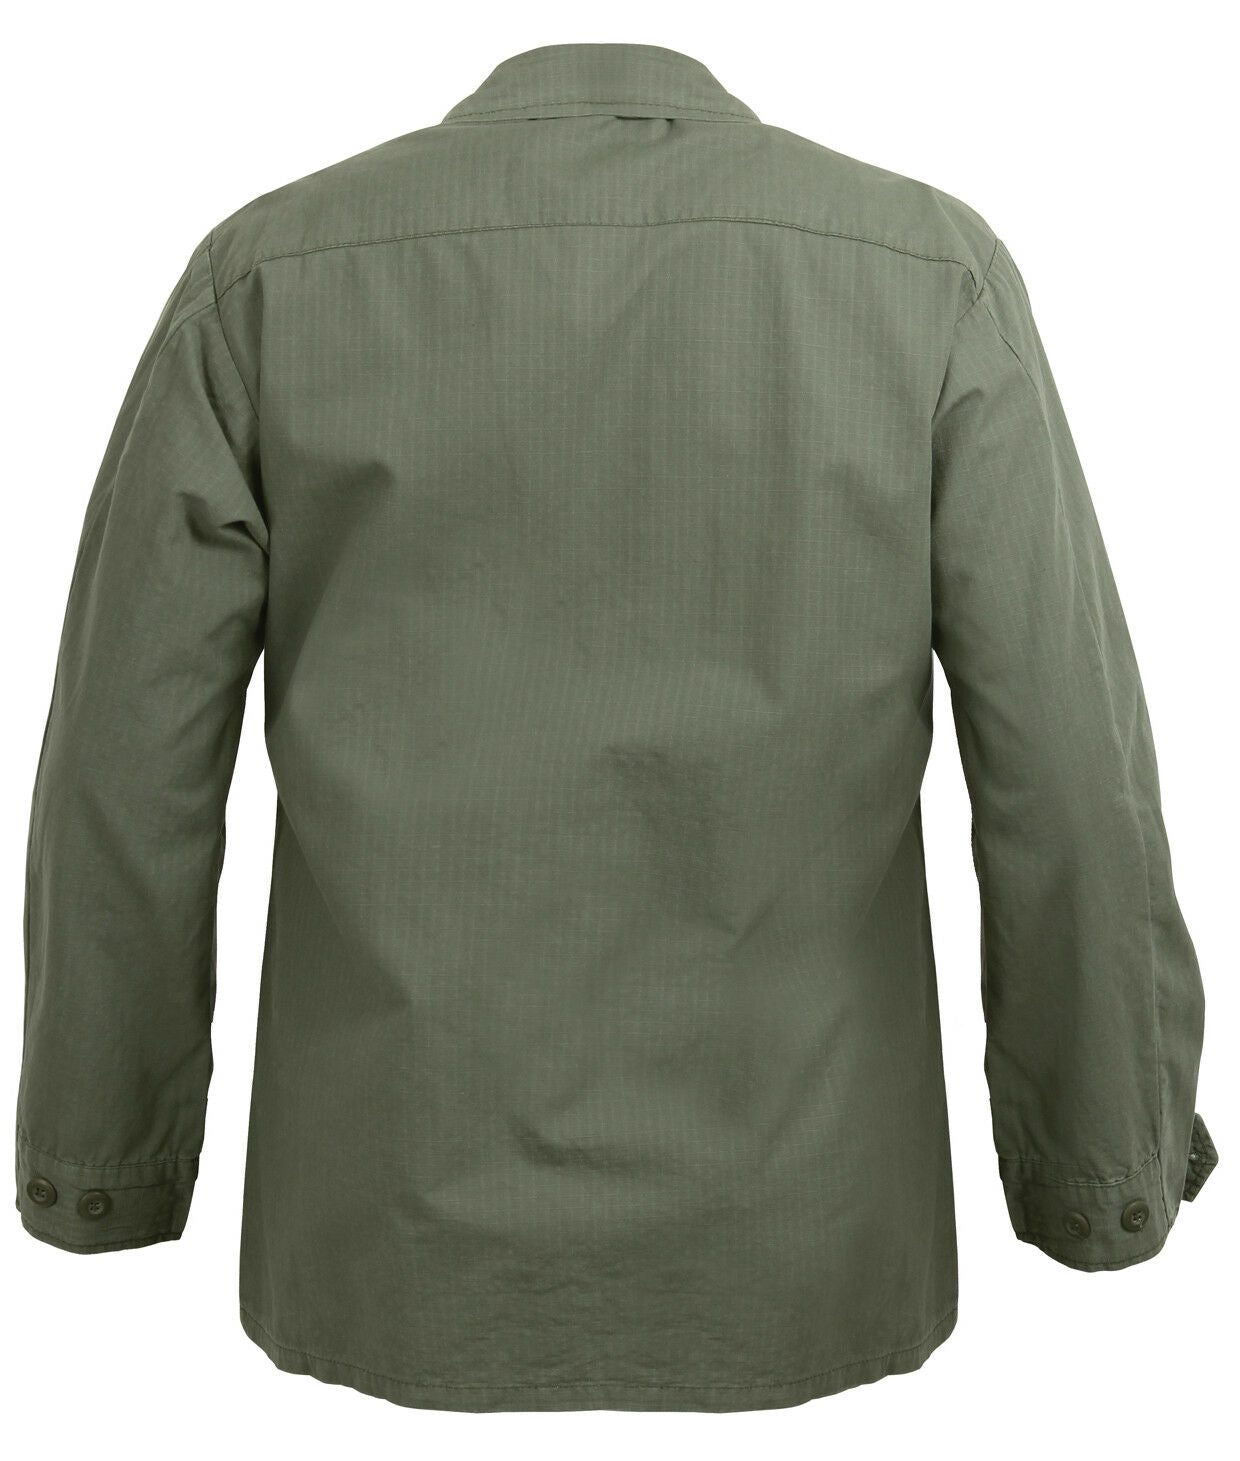 Rothco Vintage Vietnam Fatigue Shirt Rip Stop